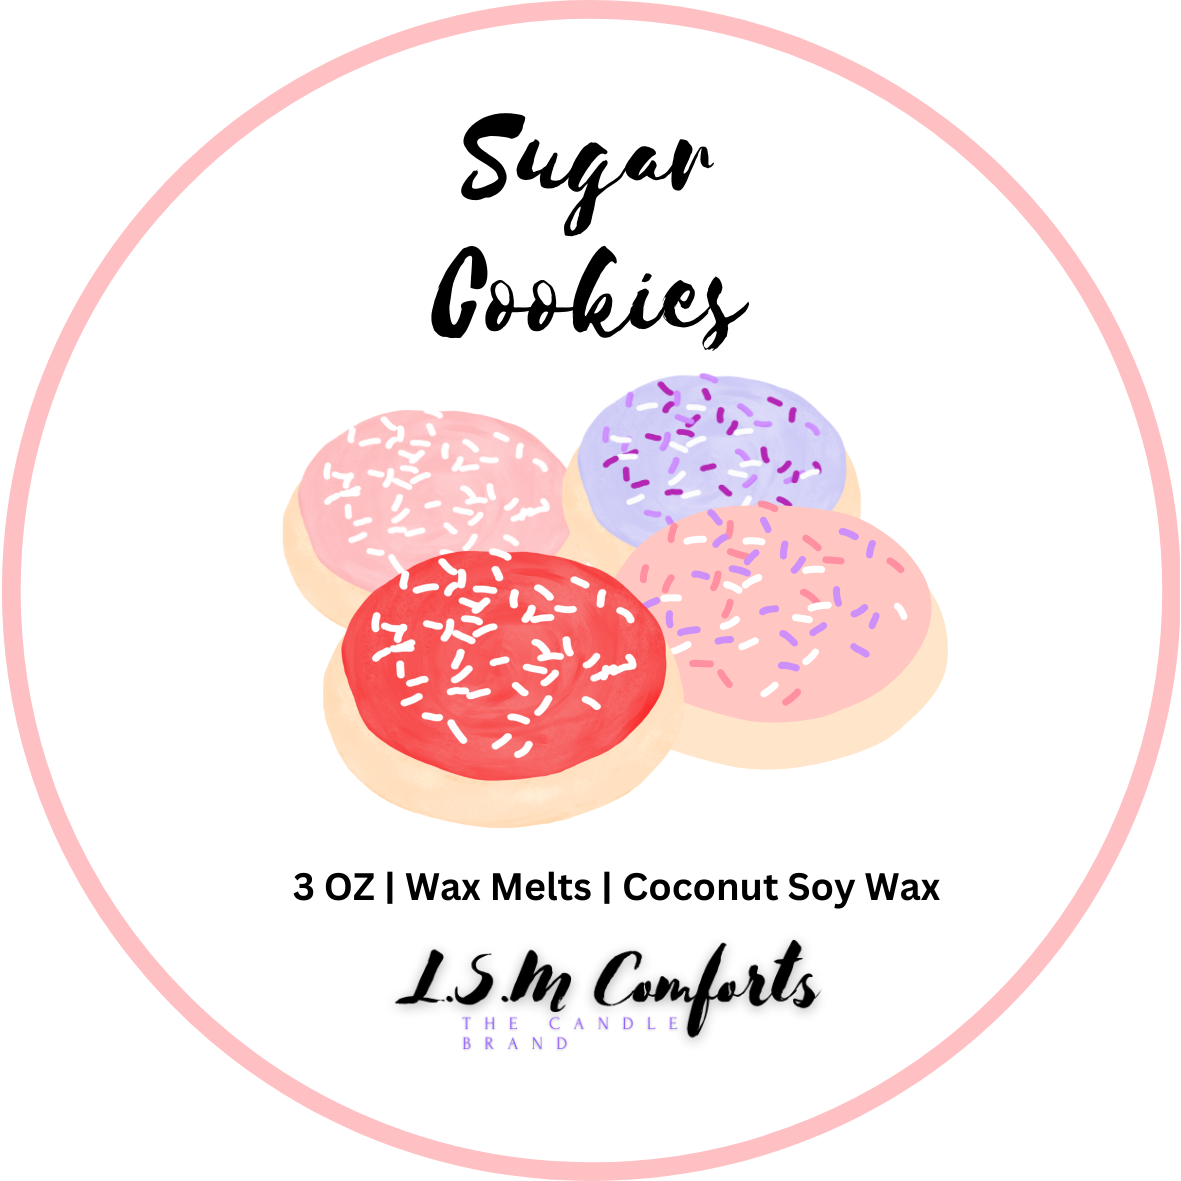 Sugar Cookies Wax Melts